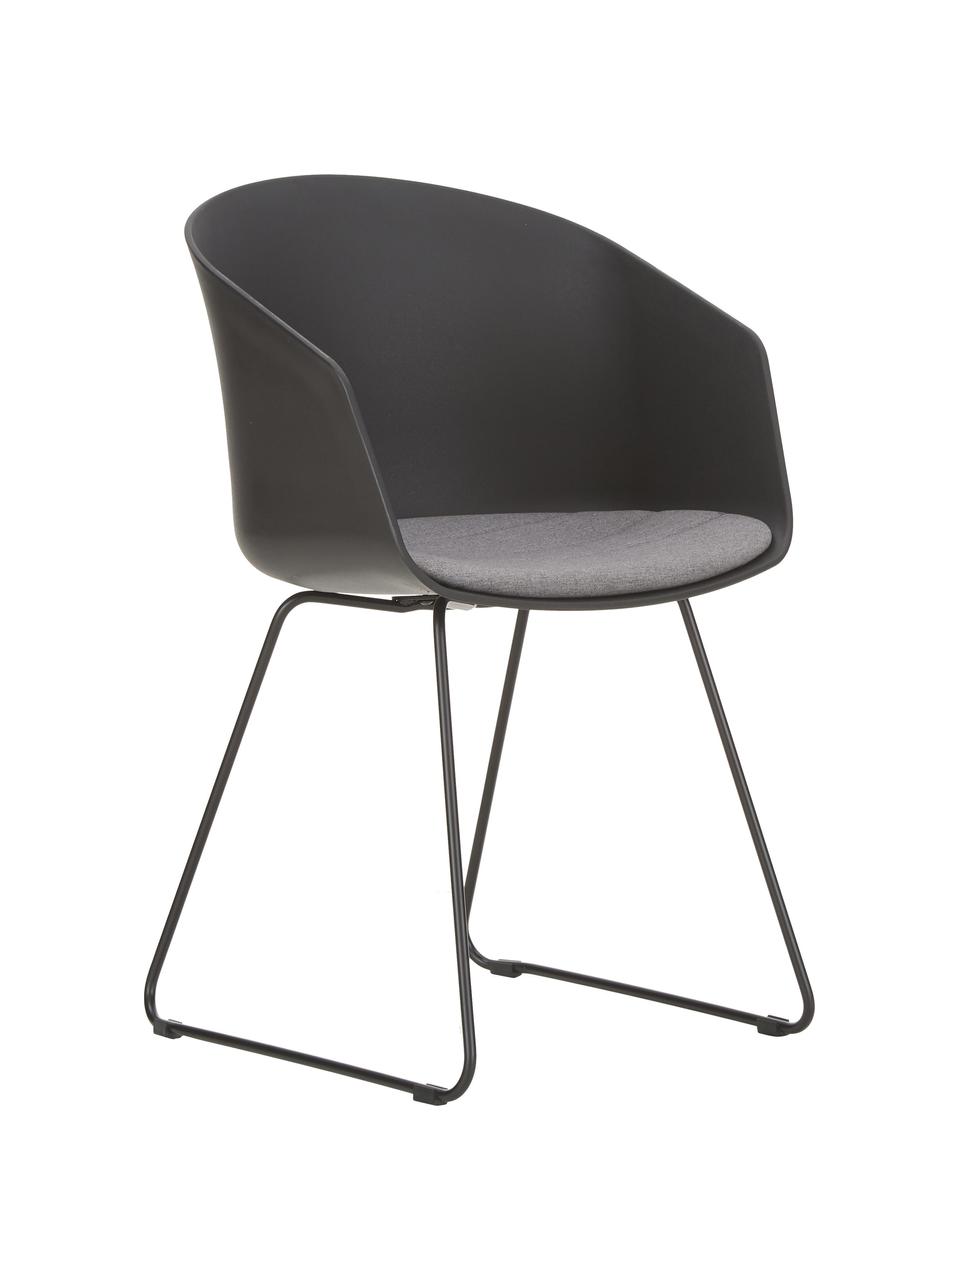 Kunststoffen armstoelen Bogart met stoelkussen, 2 stuks, Bekleding: polyester, Poten: gelakt metaal, Zwart, B 51 x D 52 cm